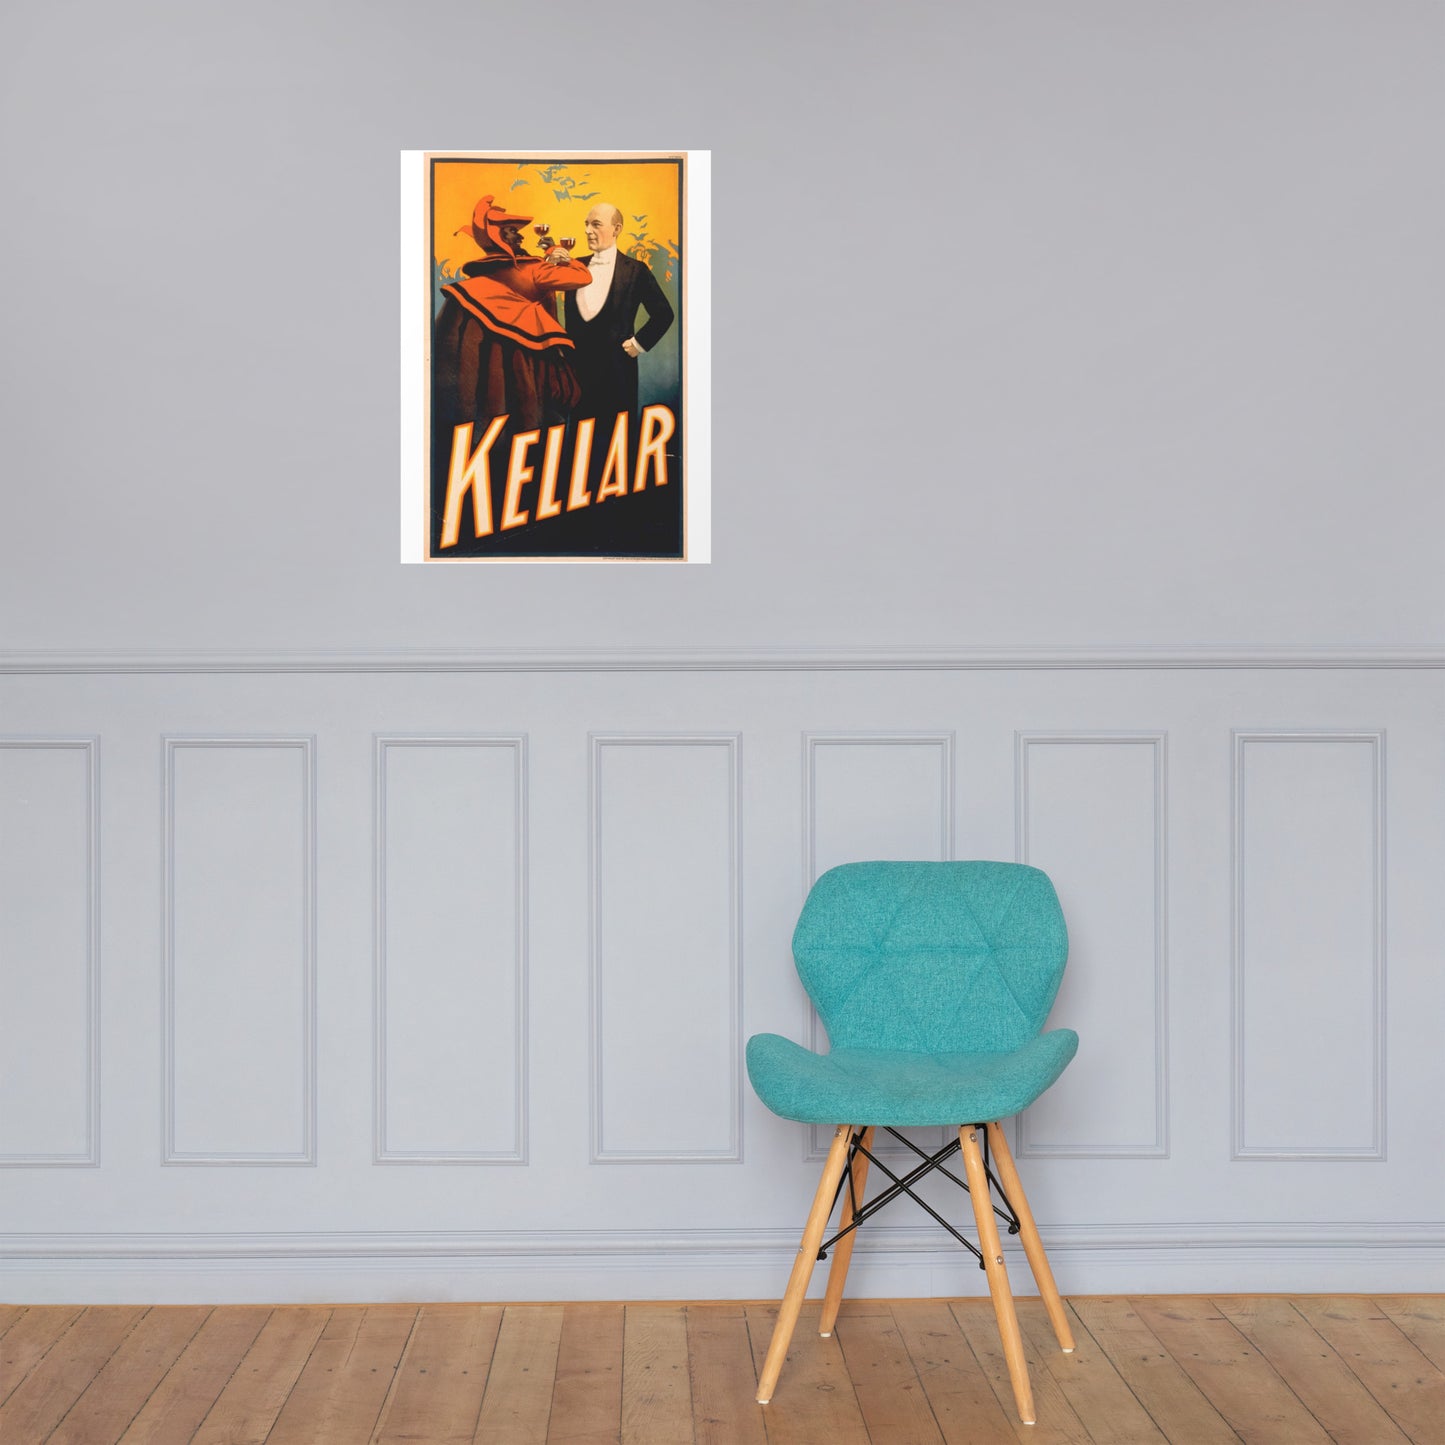 Kellar Photo paper poster